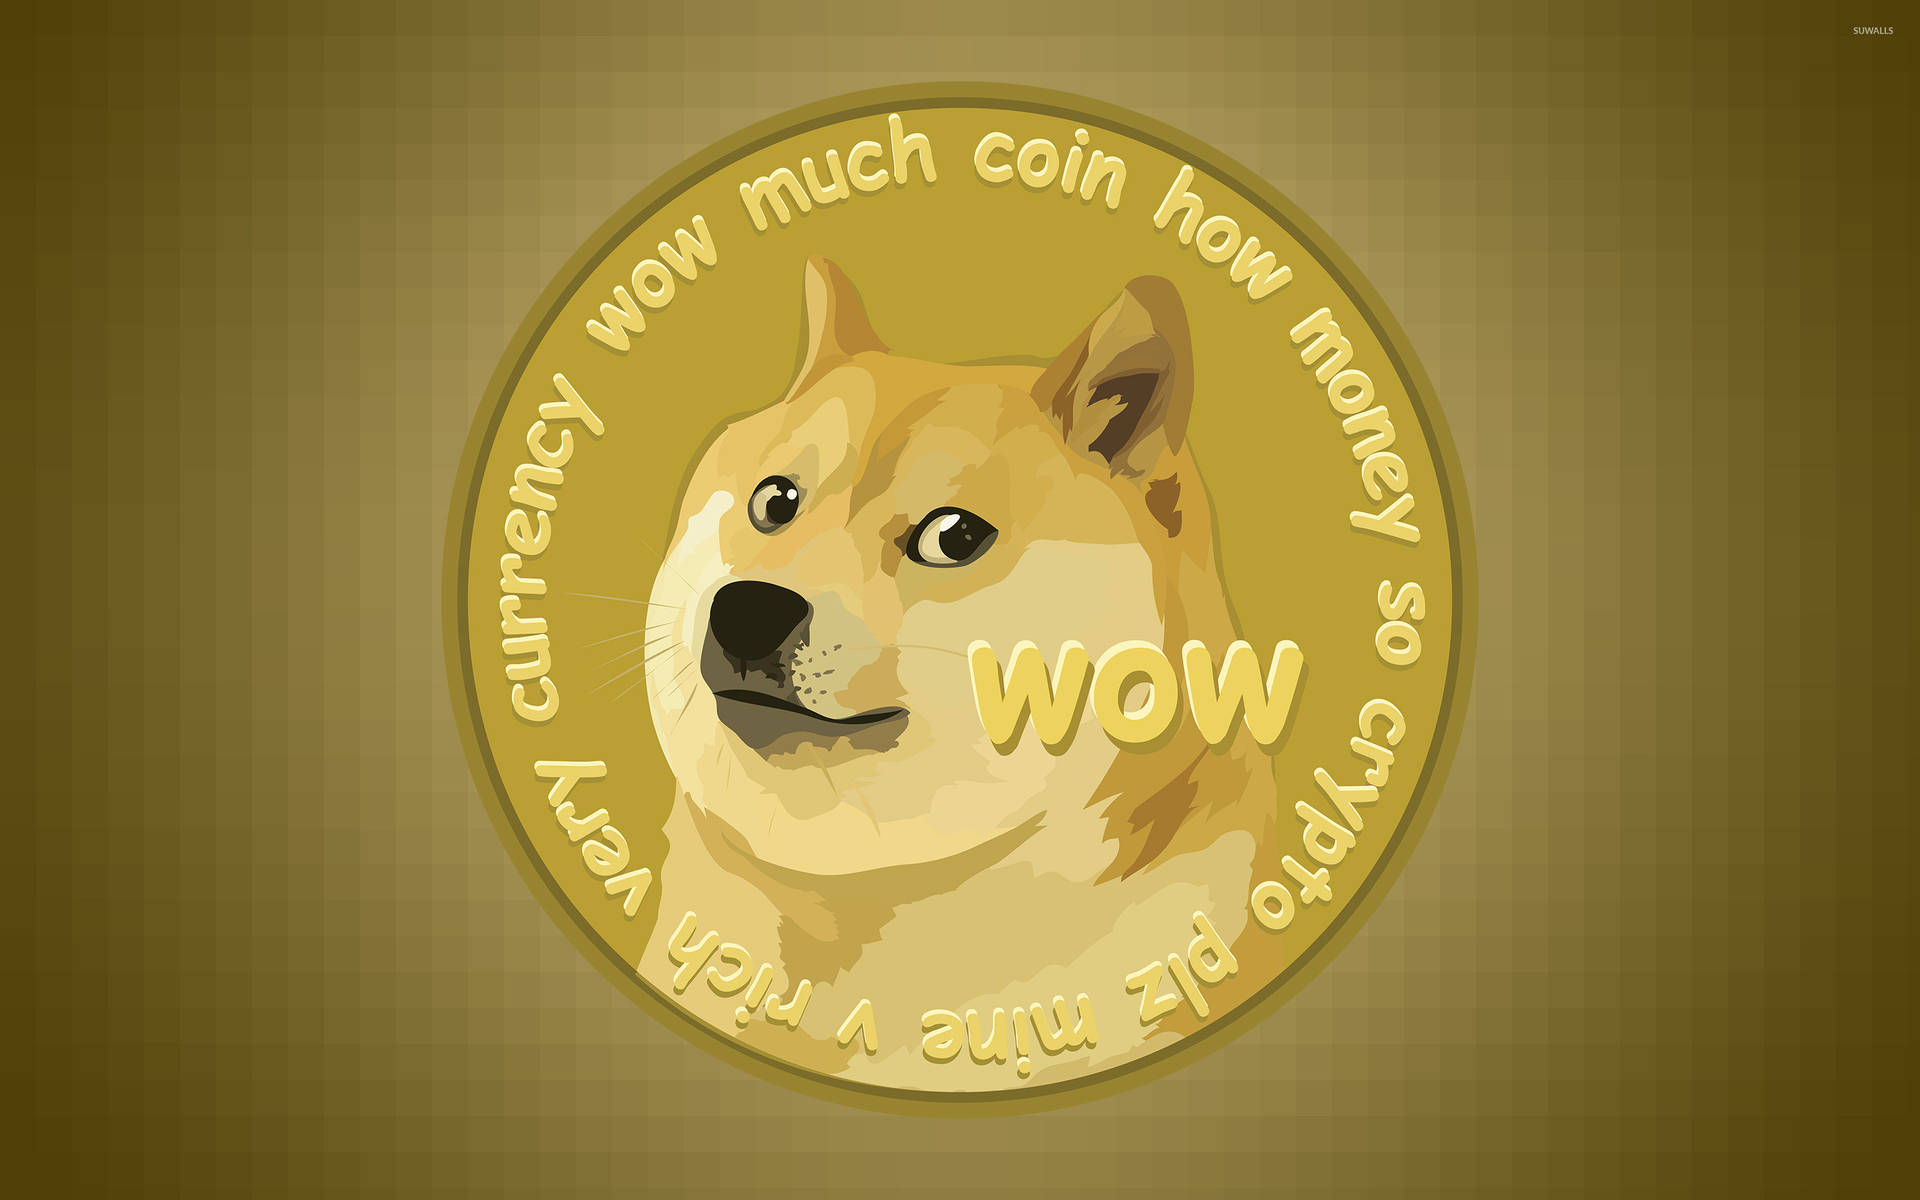 Free Doge Meme Wallpaper Downloads, [100+] Doge Meme Wallpapers for FREE |  